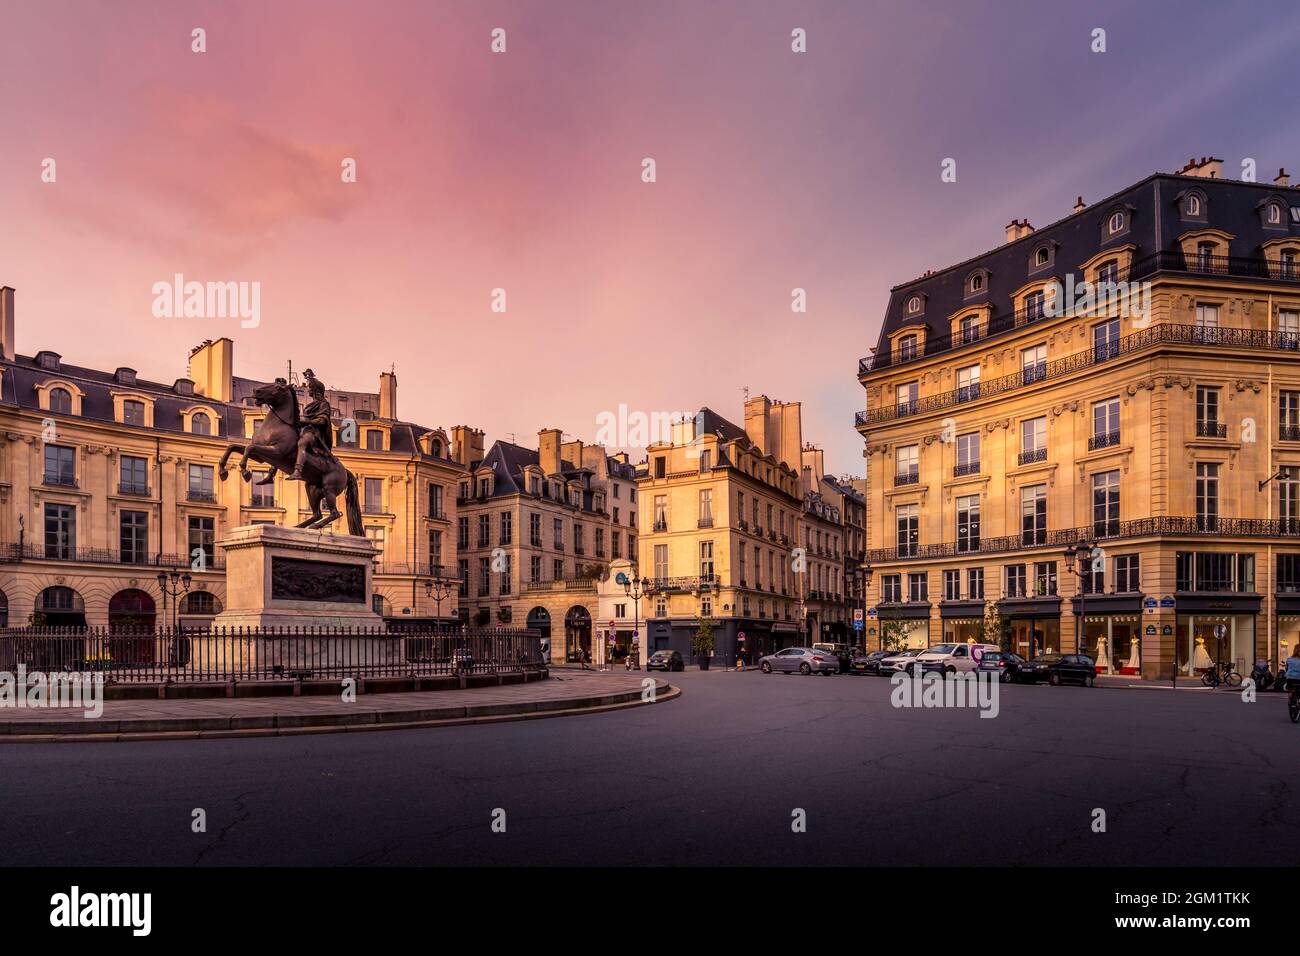 Paris, France - February 25, 2021: Beautiful buildings place des Victoires, typical parisian facades and windows Stock Photo